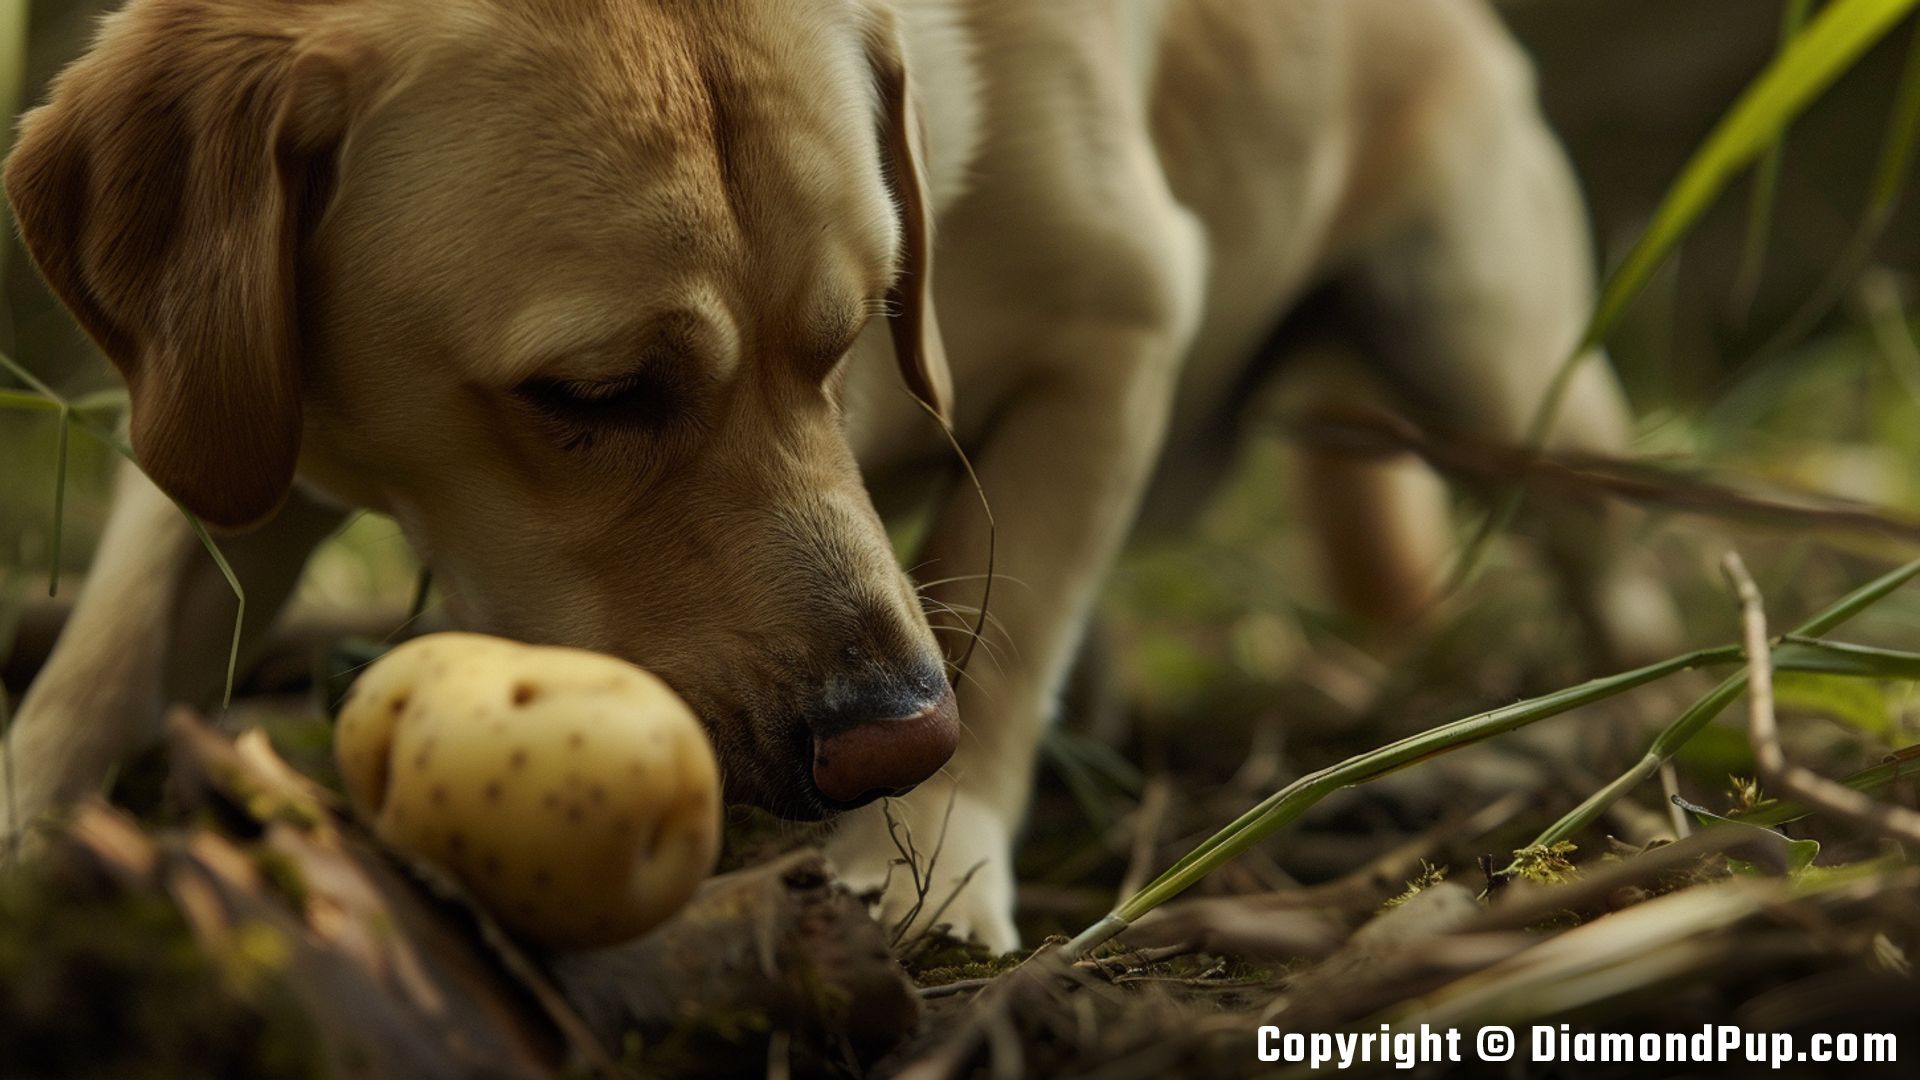 Image of an Adorable Labrador Snacking on Potato